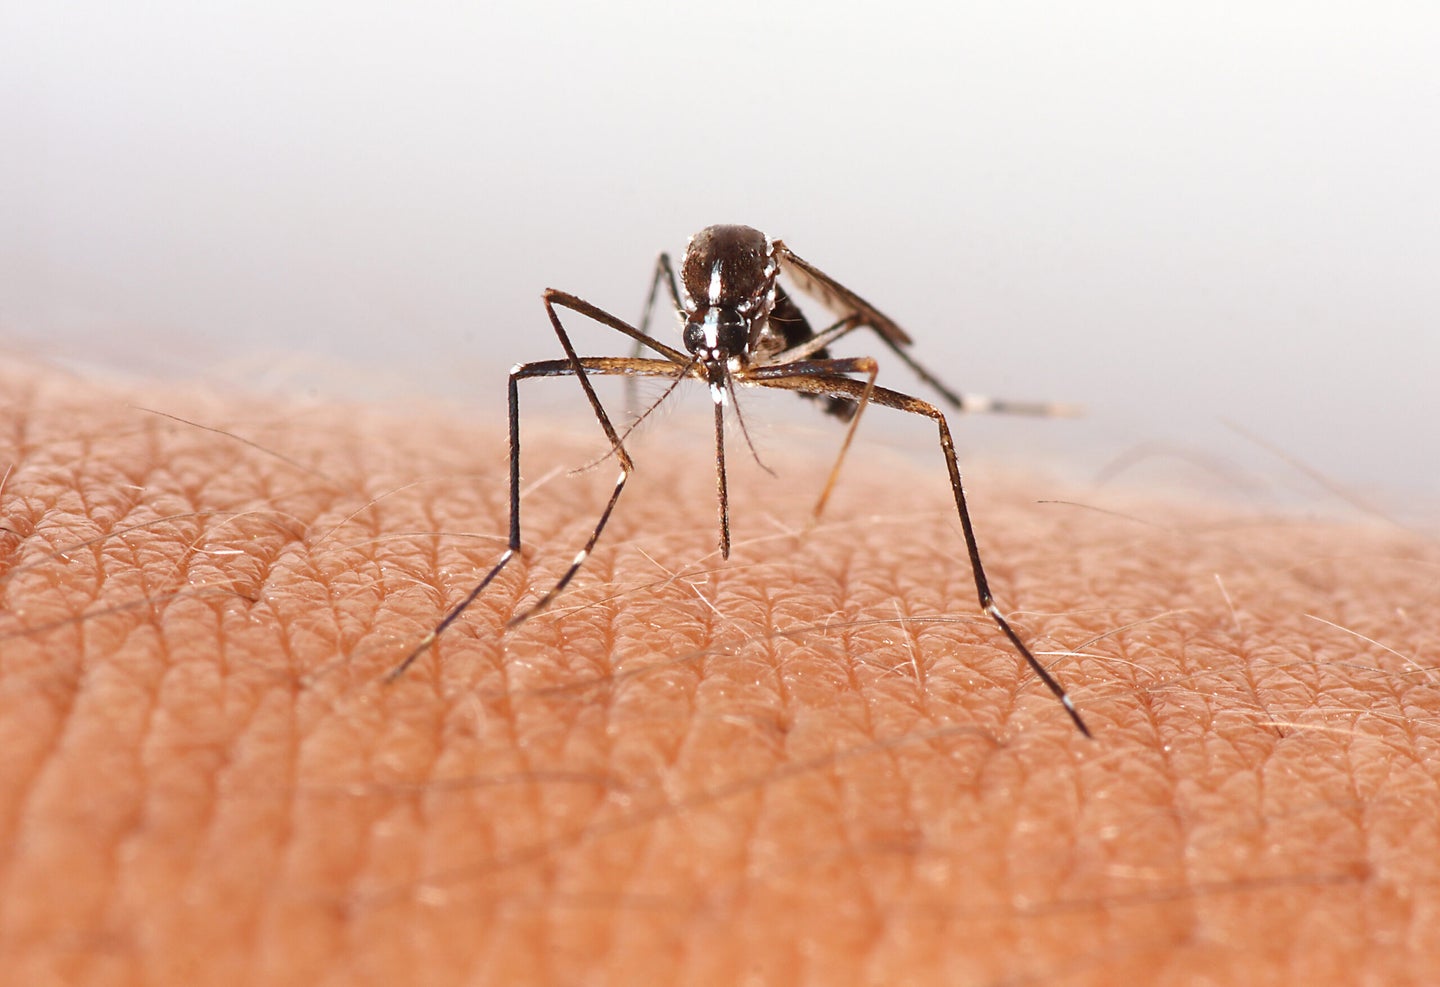 A mosquito bites human skin